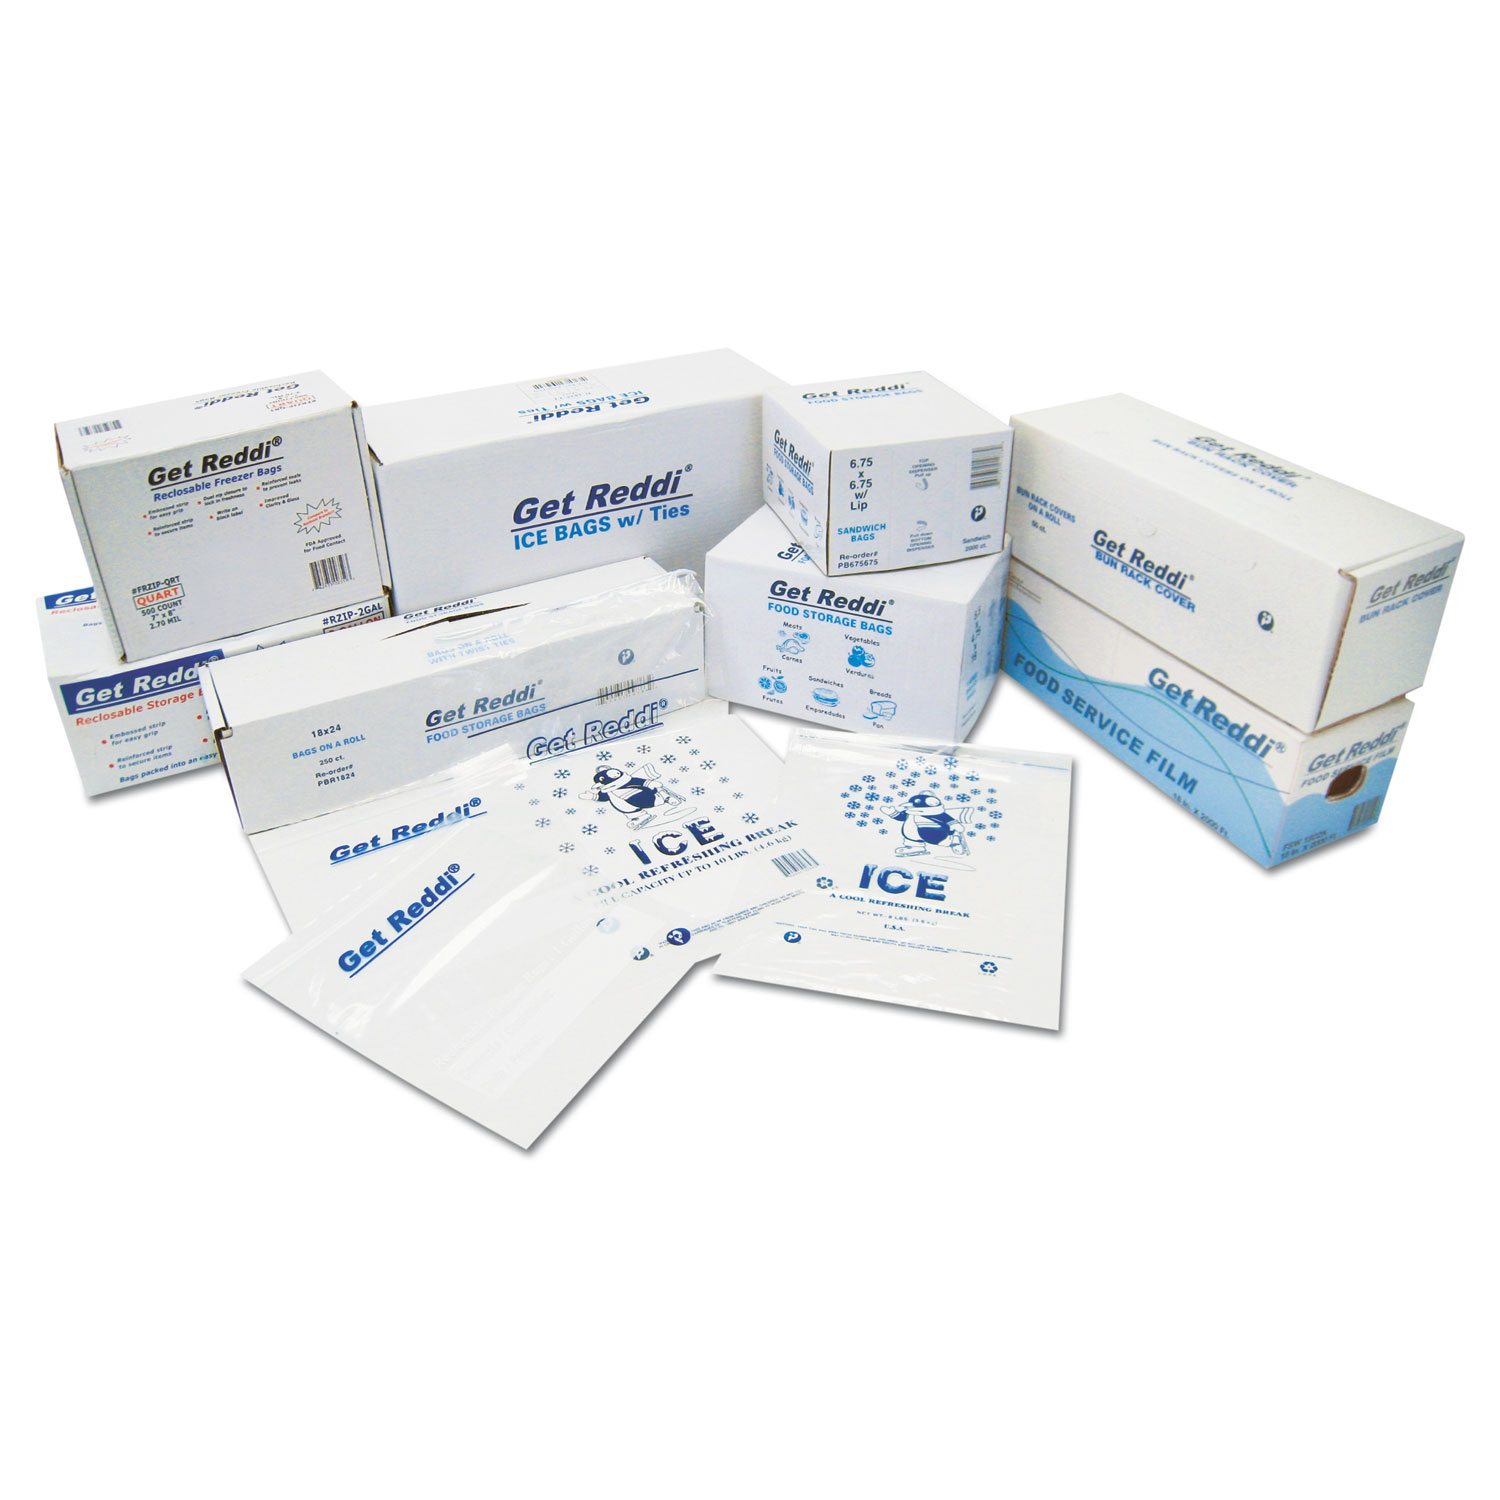 6 White Paper Bags, 500/Case - mastersupplyonline